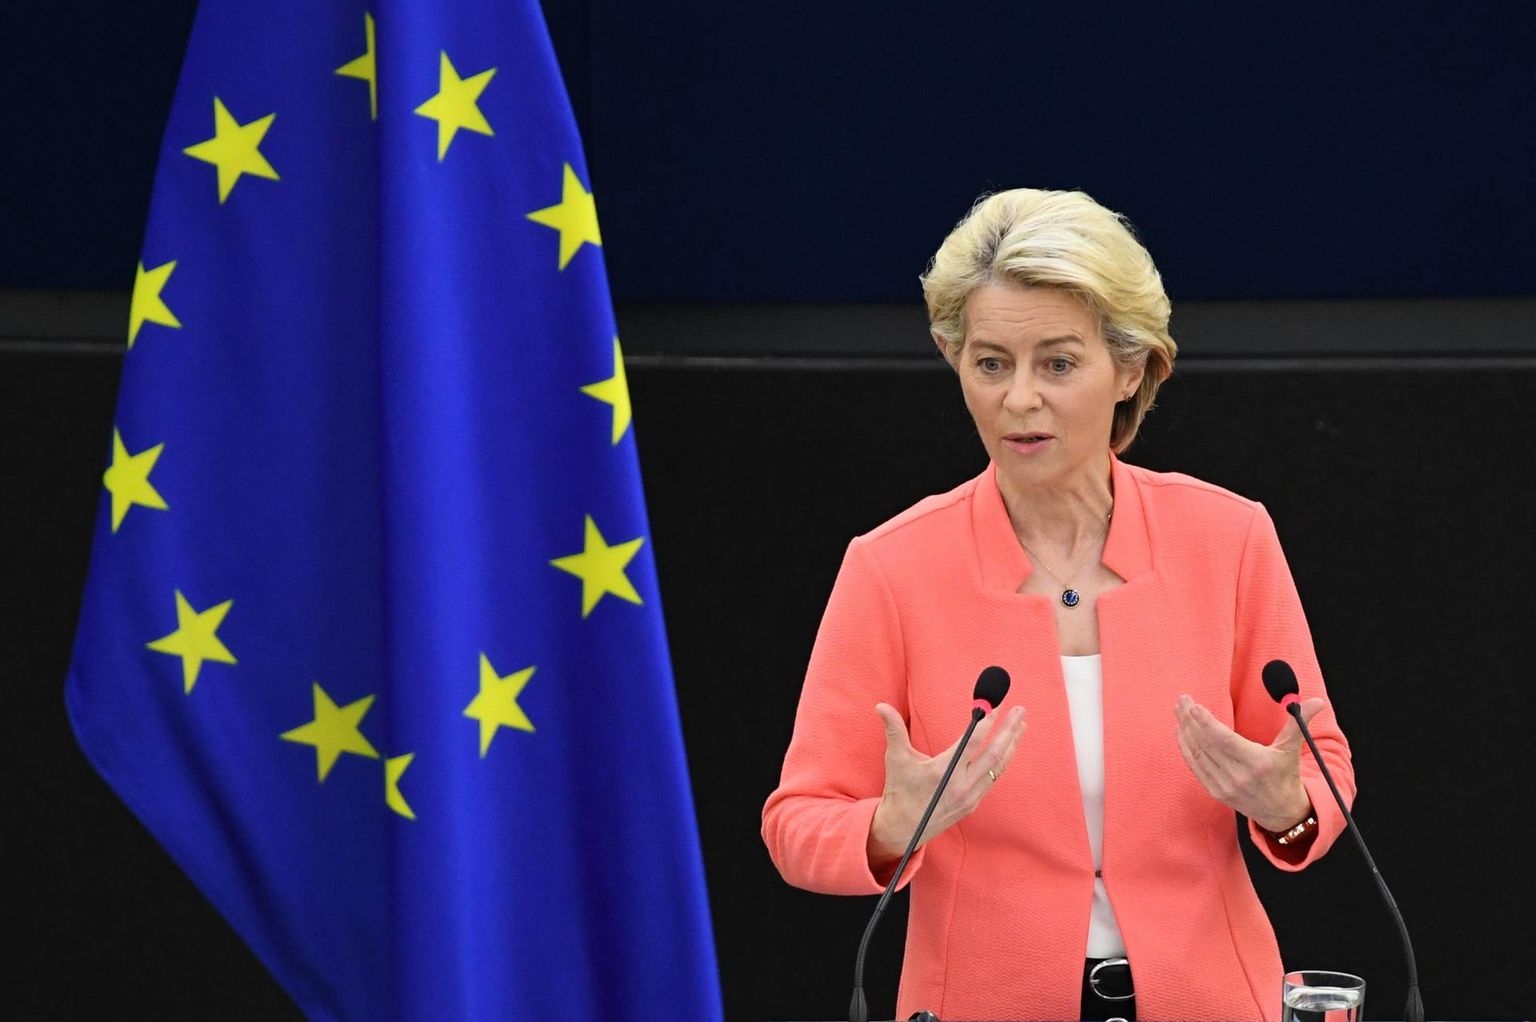 Euroopa Komisjoni president Ursula von der Leyen Euroopa Parlamendi ees kõnet pidamas 15.09.2021